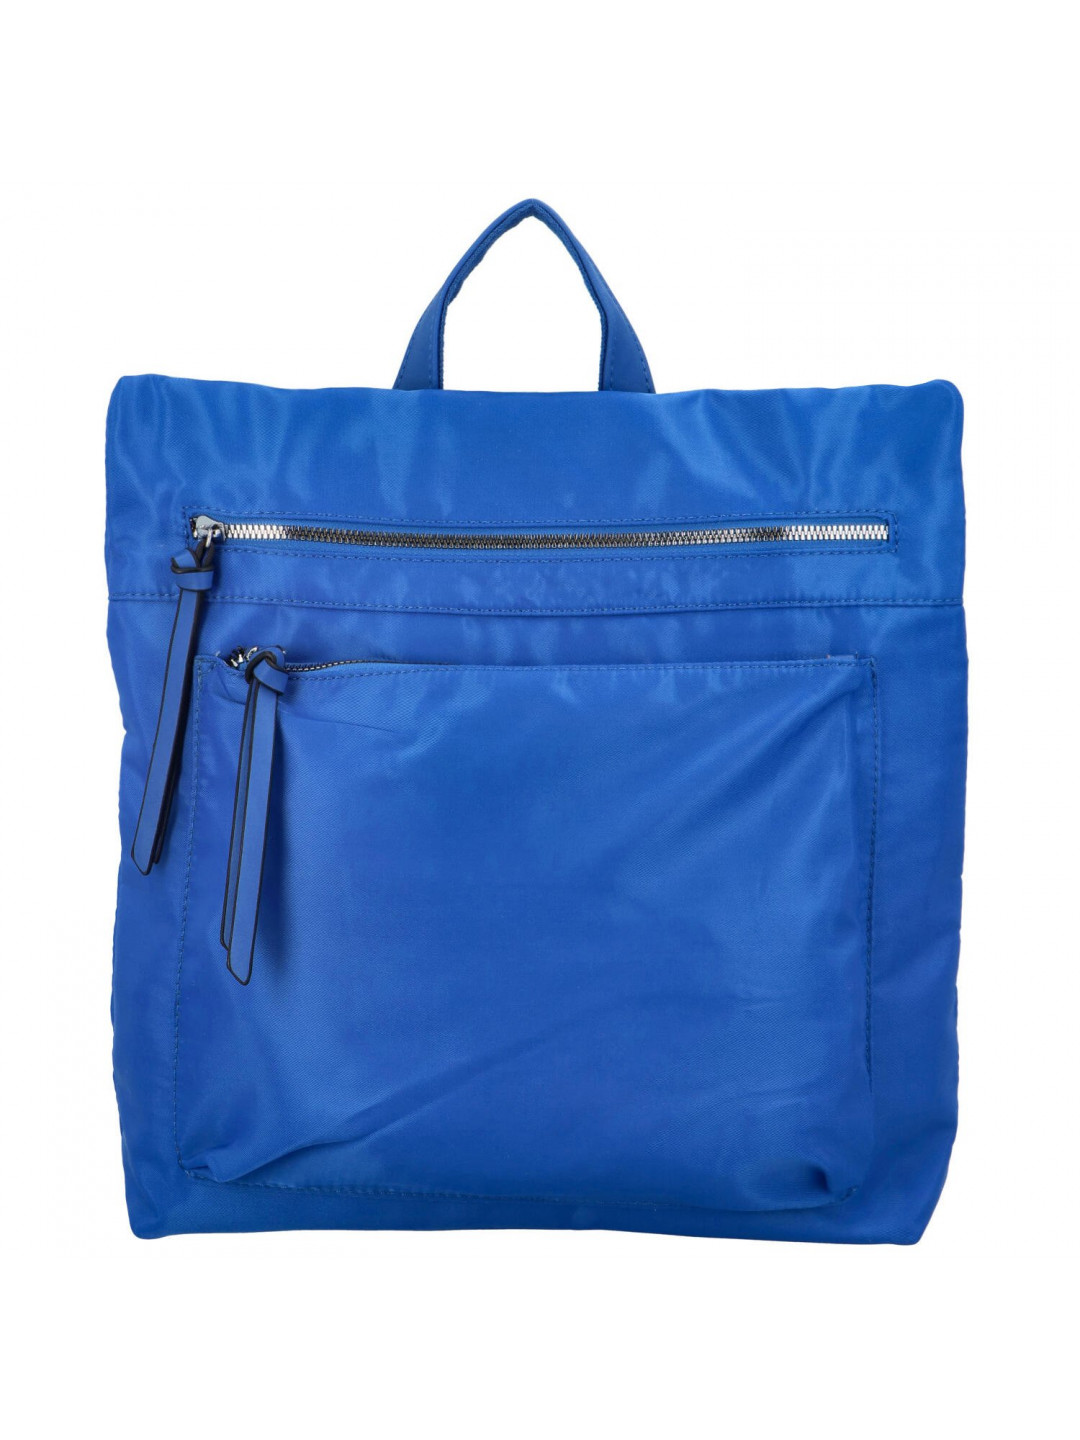 Dámský kabelko-batoh modrý – Paolo bags Vanilla